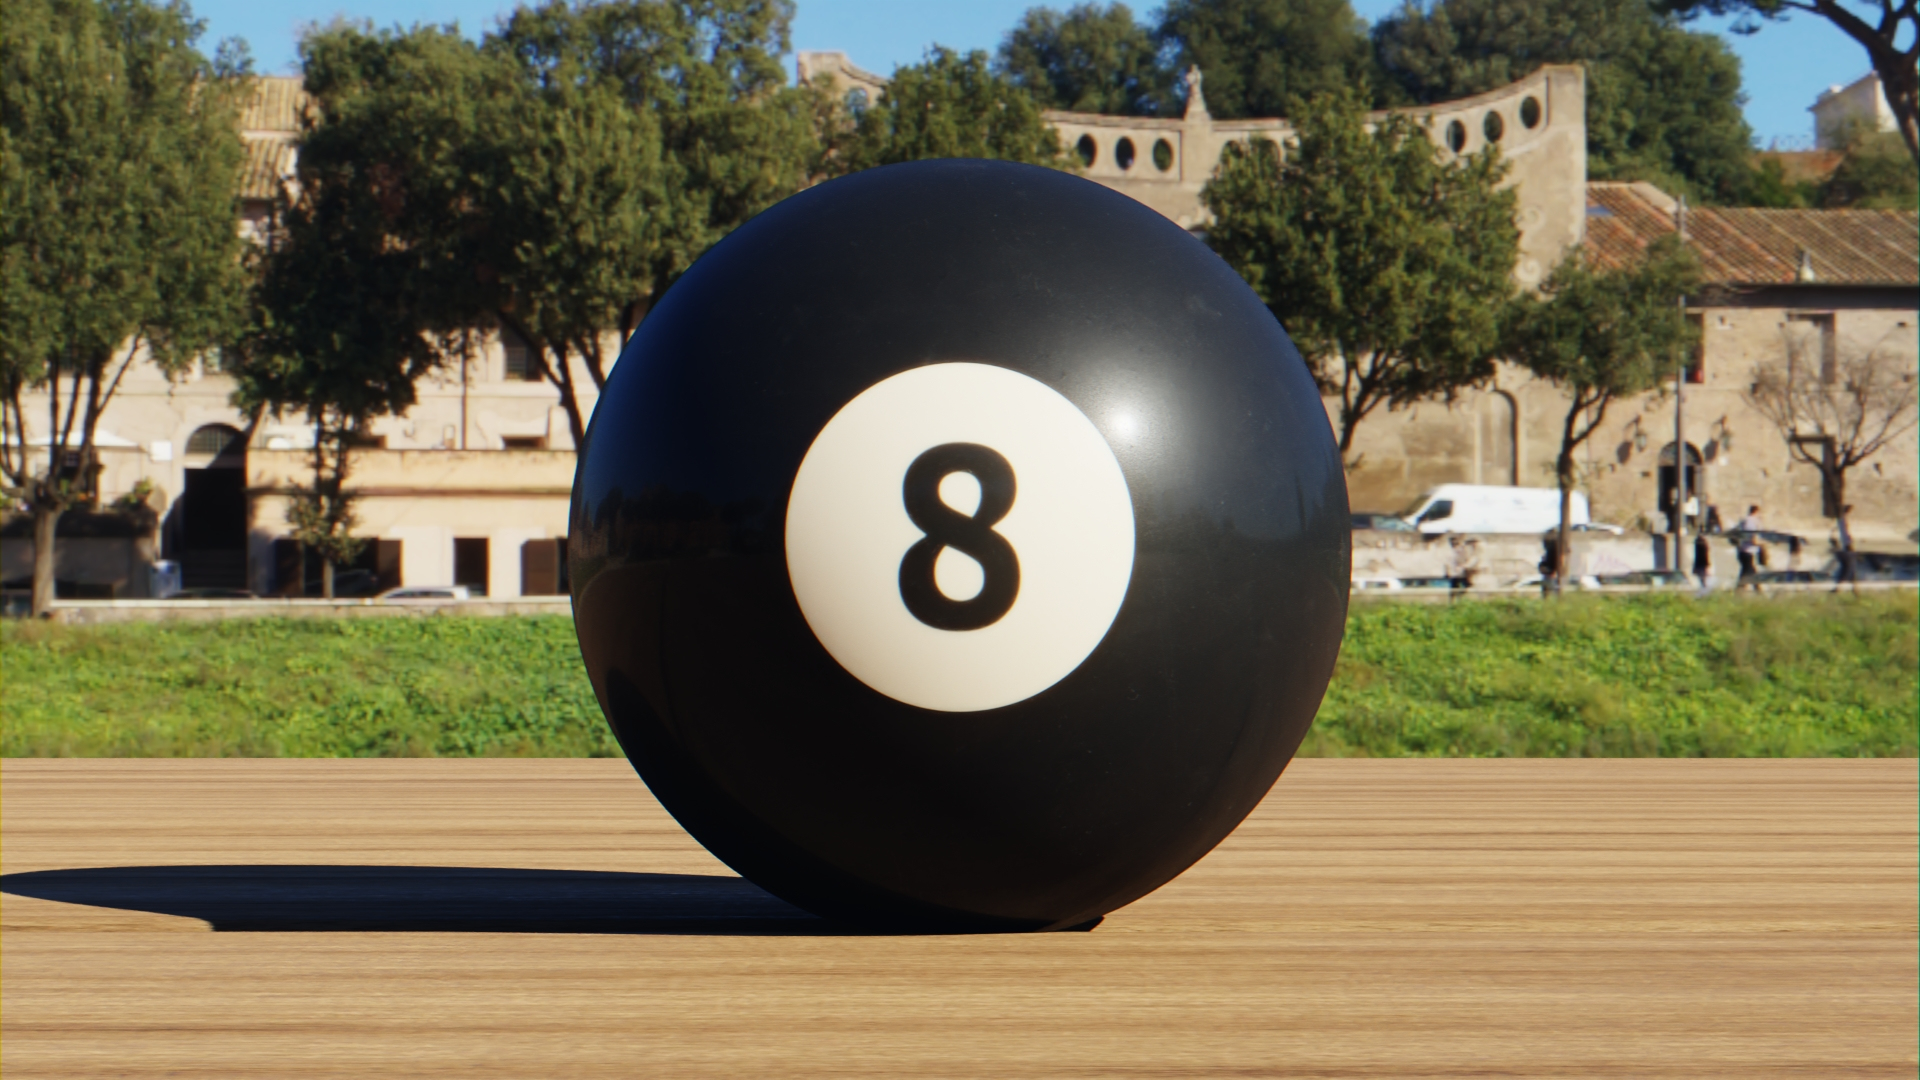 8 ball 3D model - TurboSquid 1629507